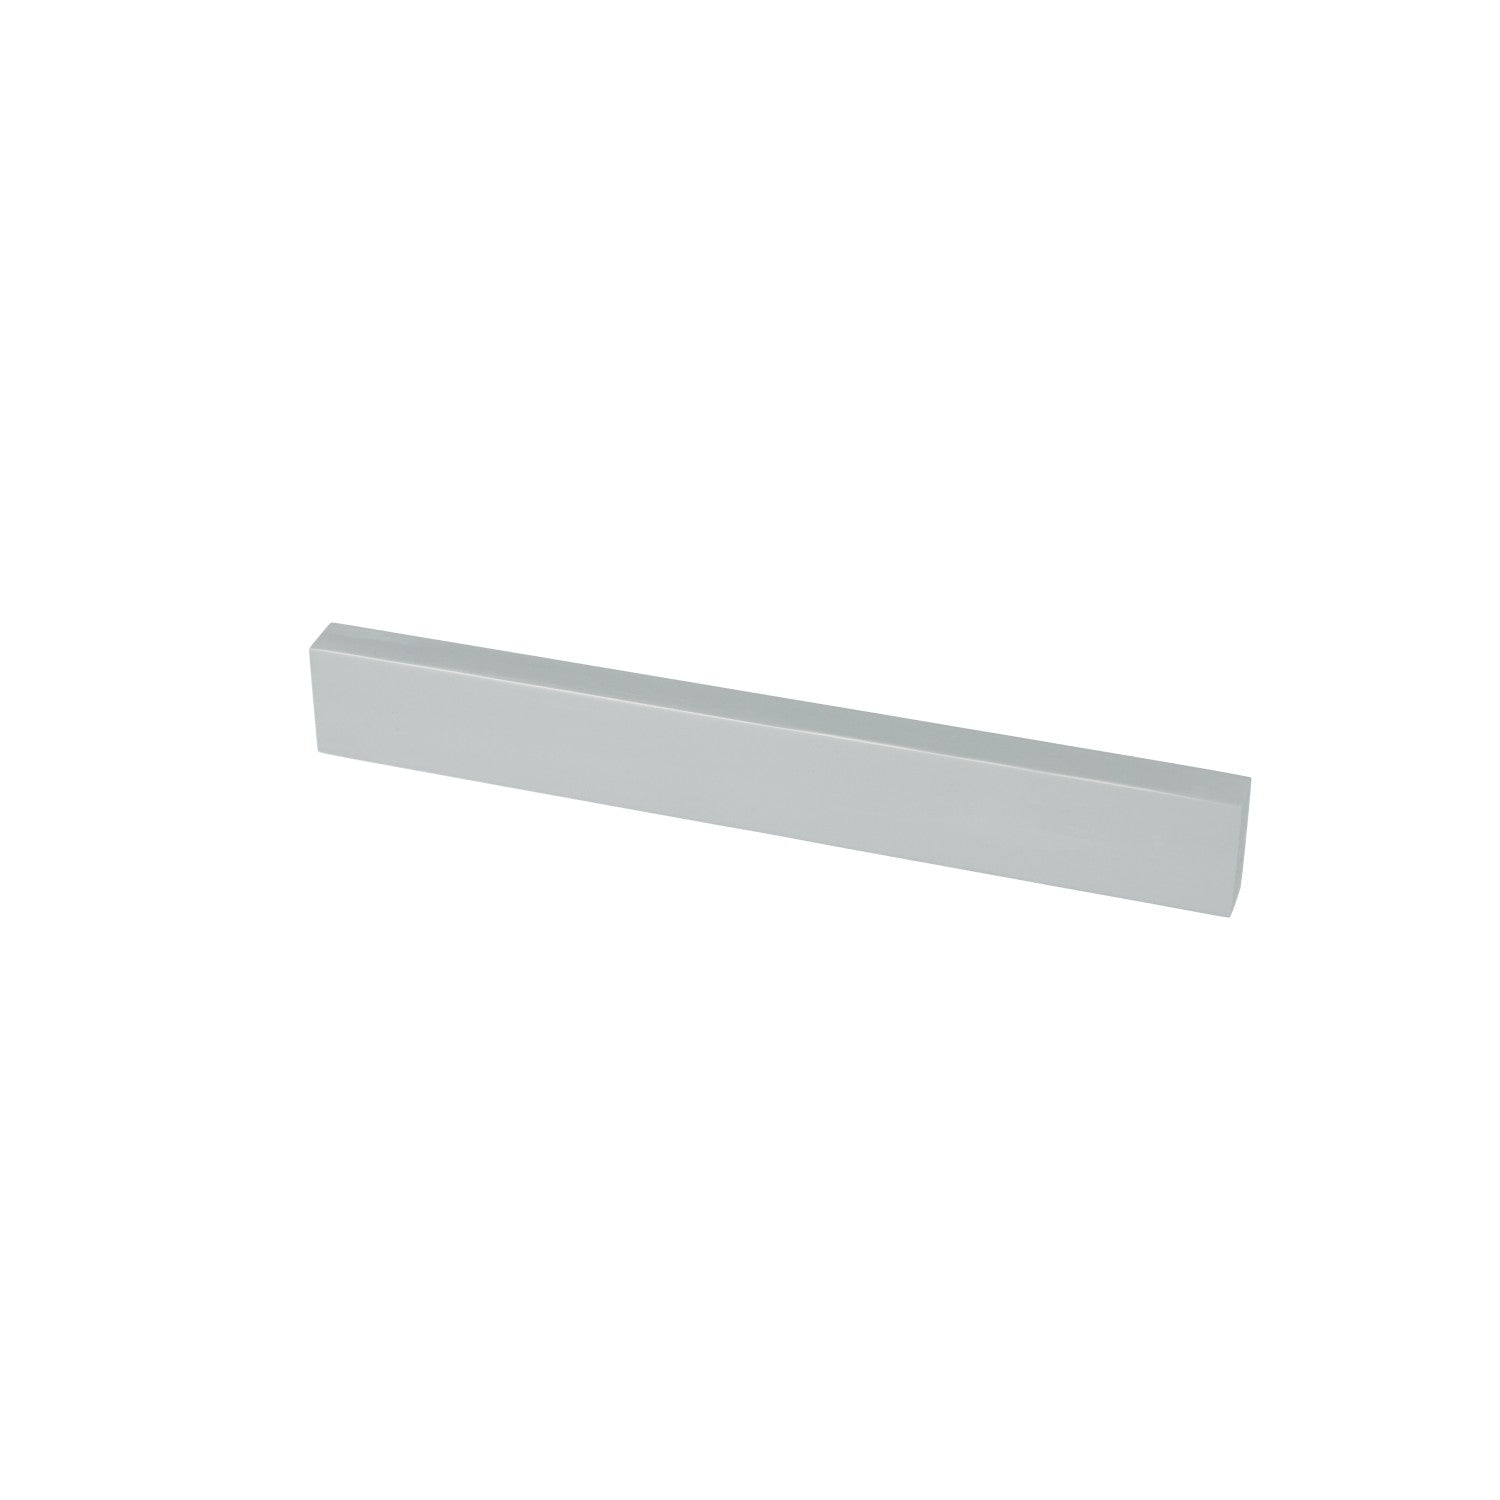 Hammersholt • Enkelt møbelgreb i overfladebehandlet aluminium